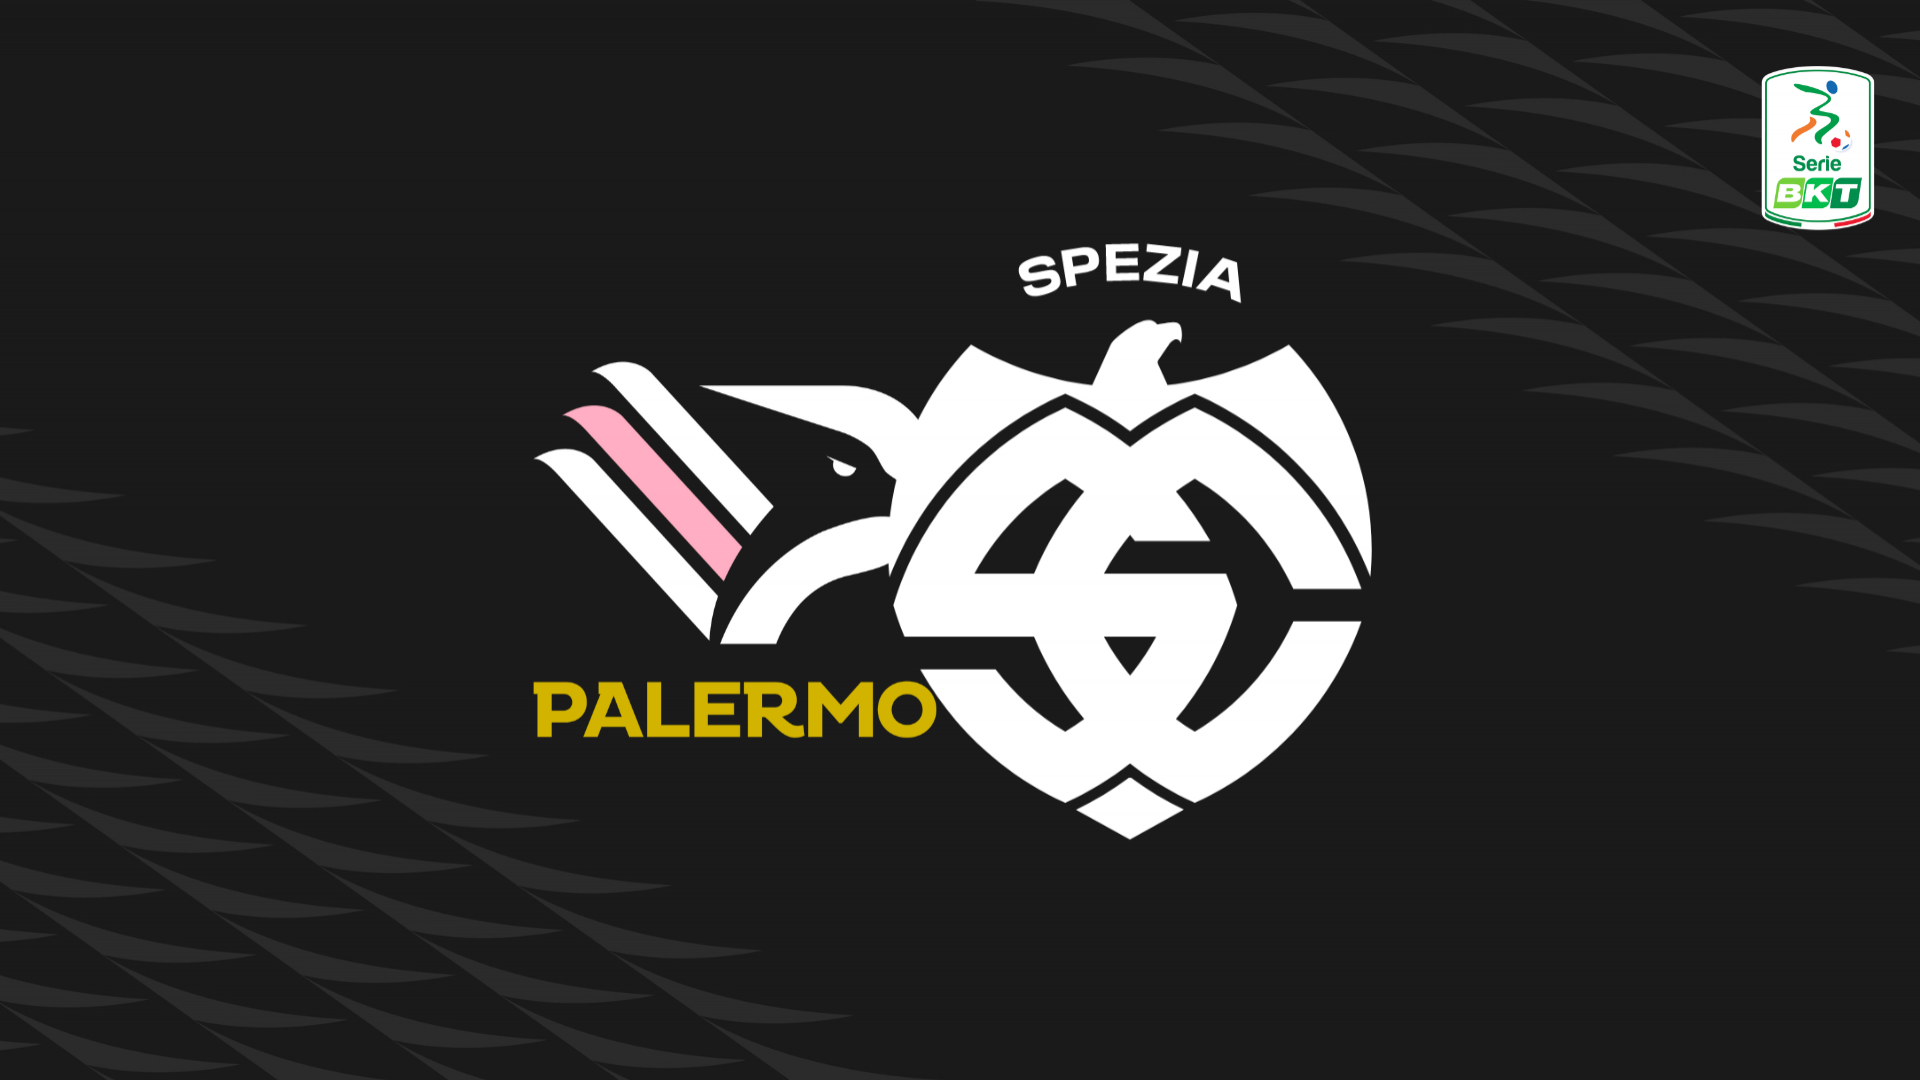 Serie BKT: Palermo-Spezia 2-2